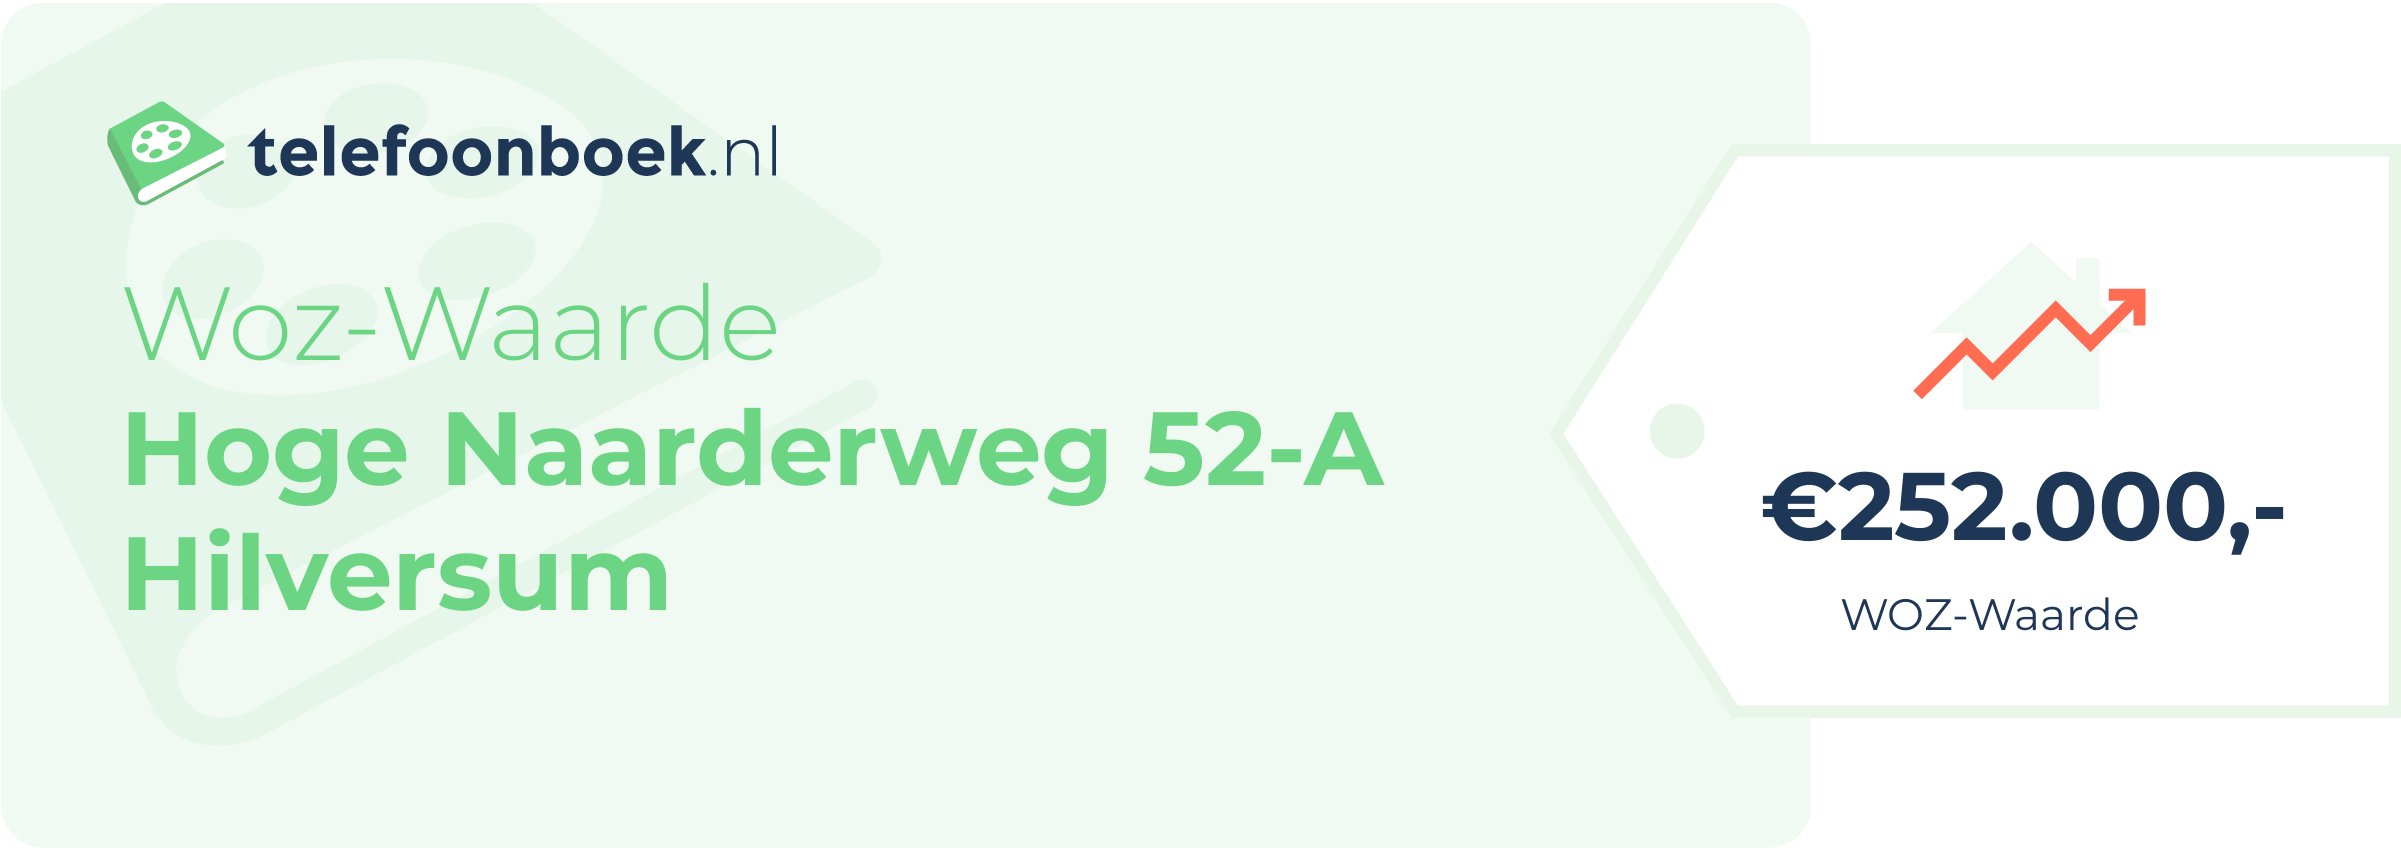 WOZ-waarde Hoge Naarderweg 52-A Hilversum